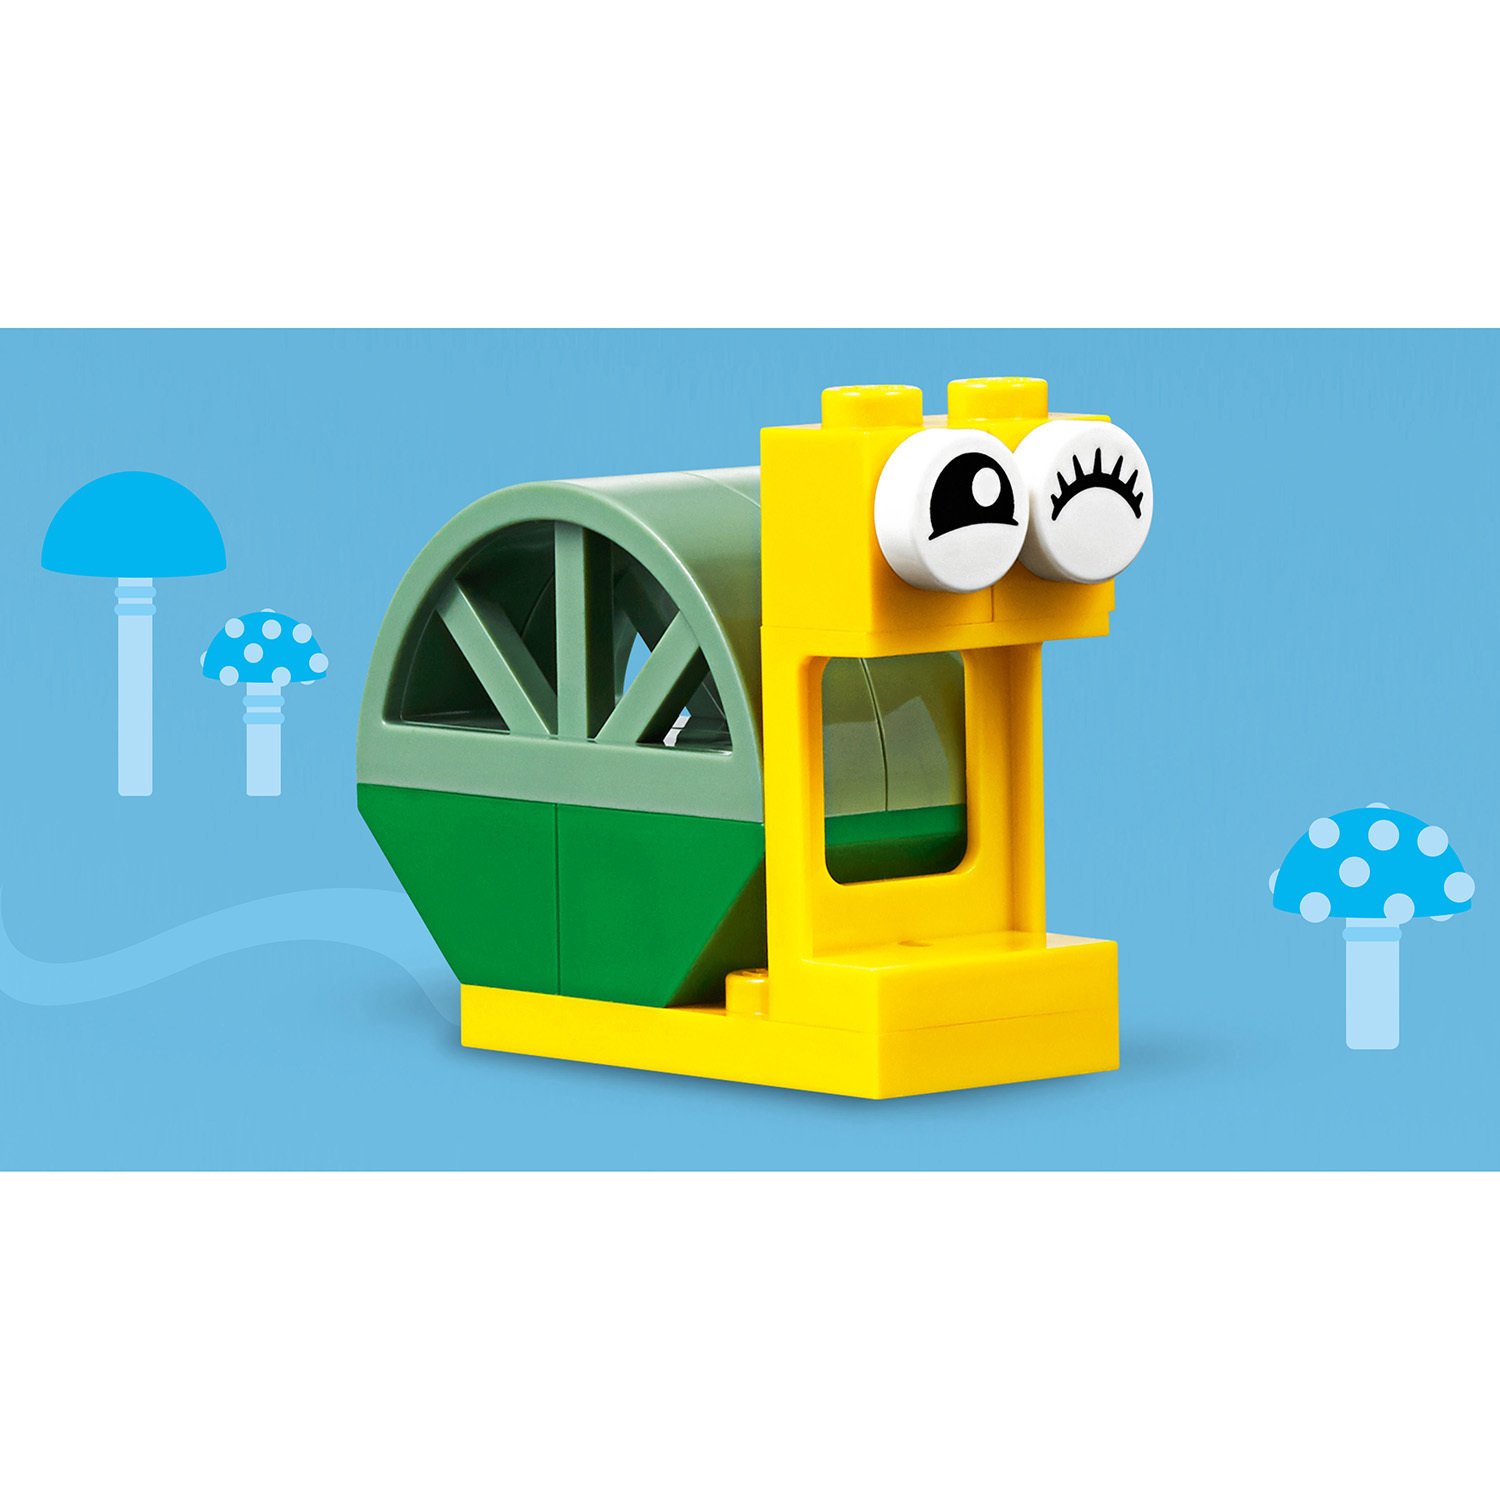 Конструктор Lego Классика - Набор для творчества с окнами  